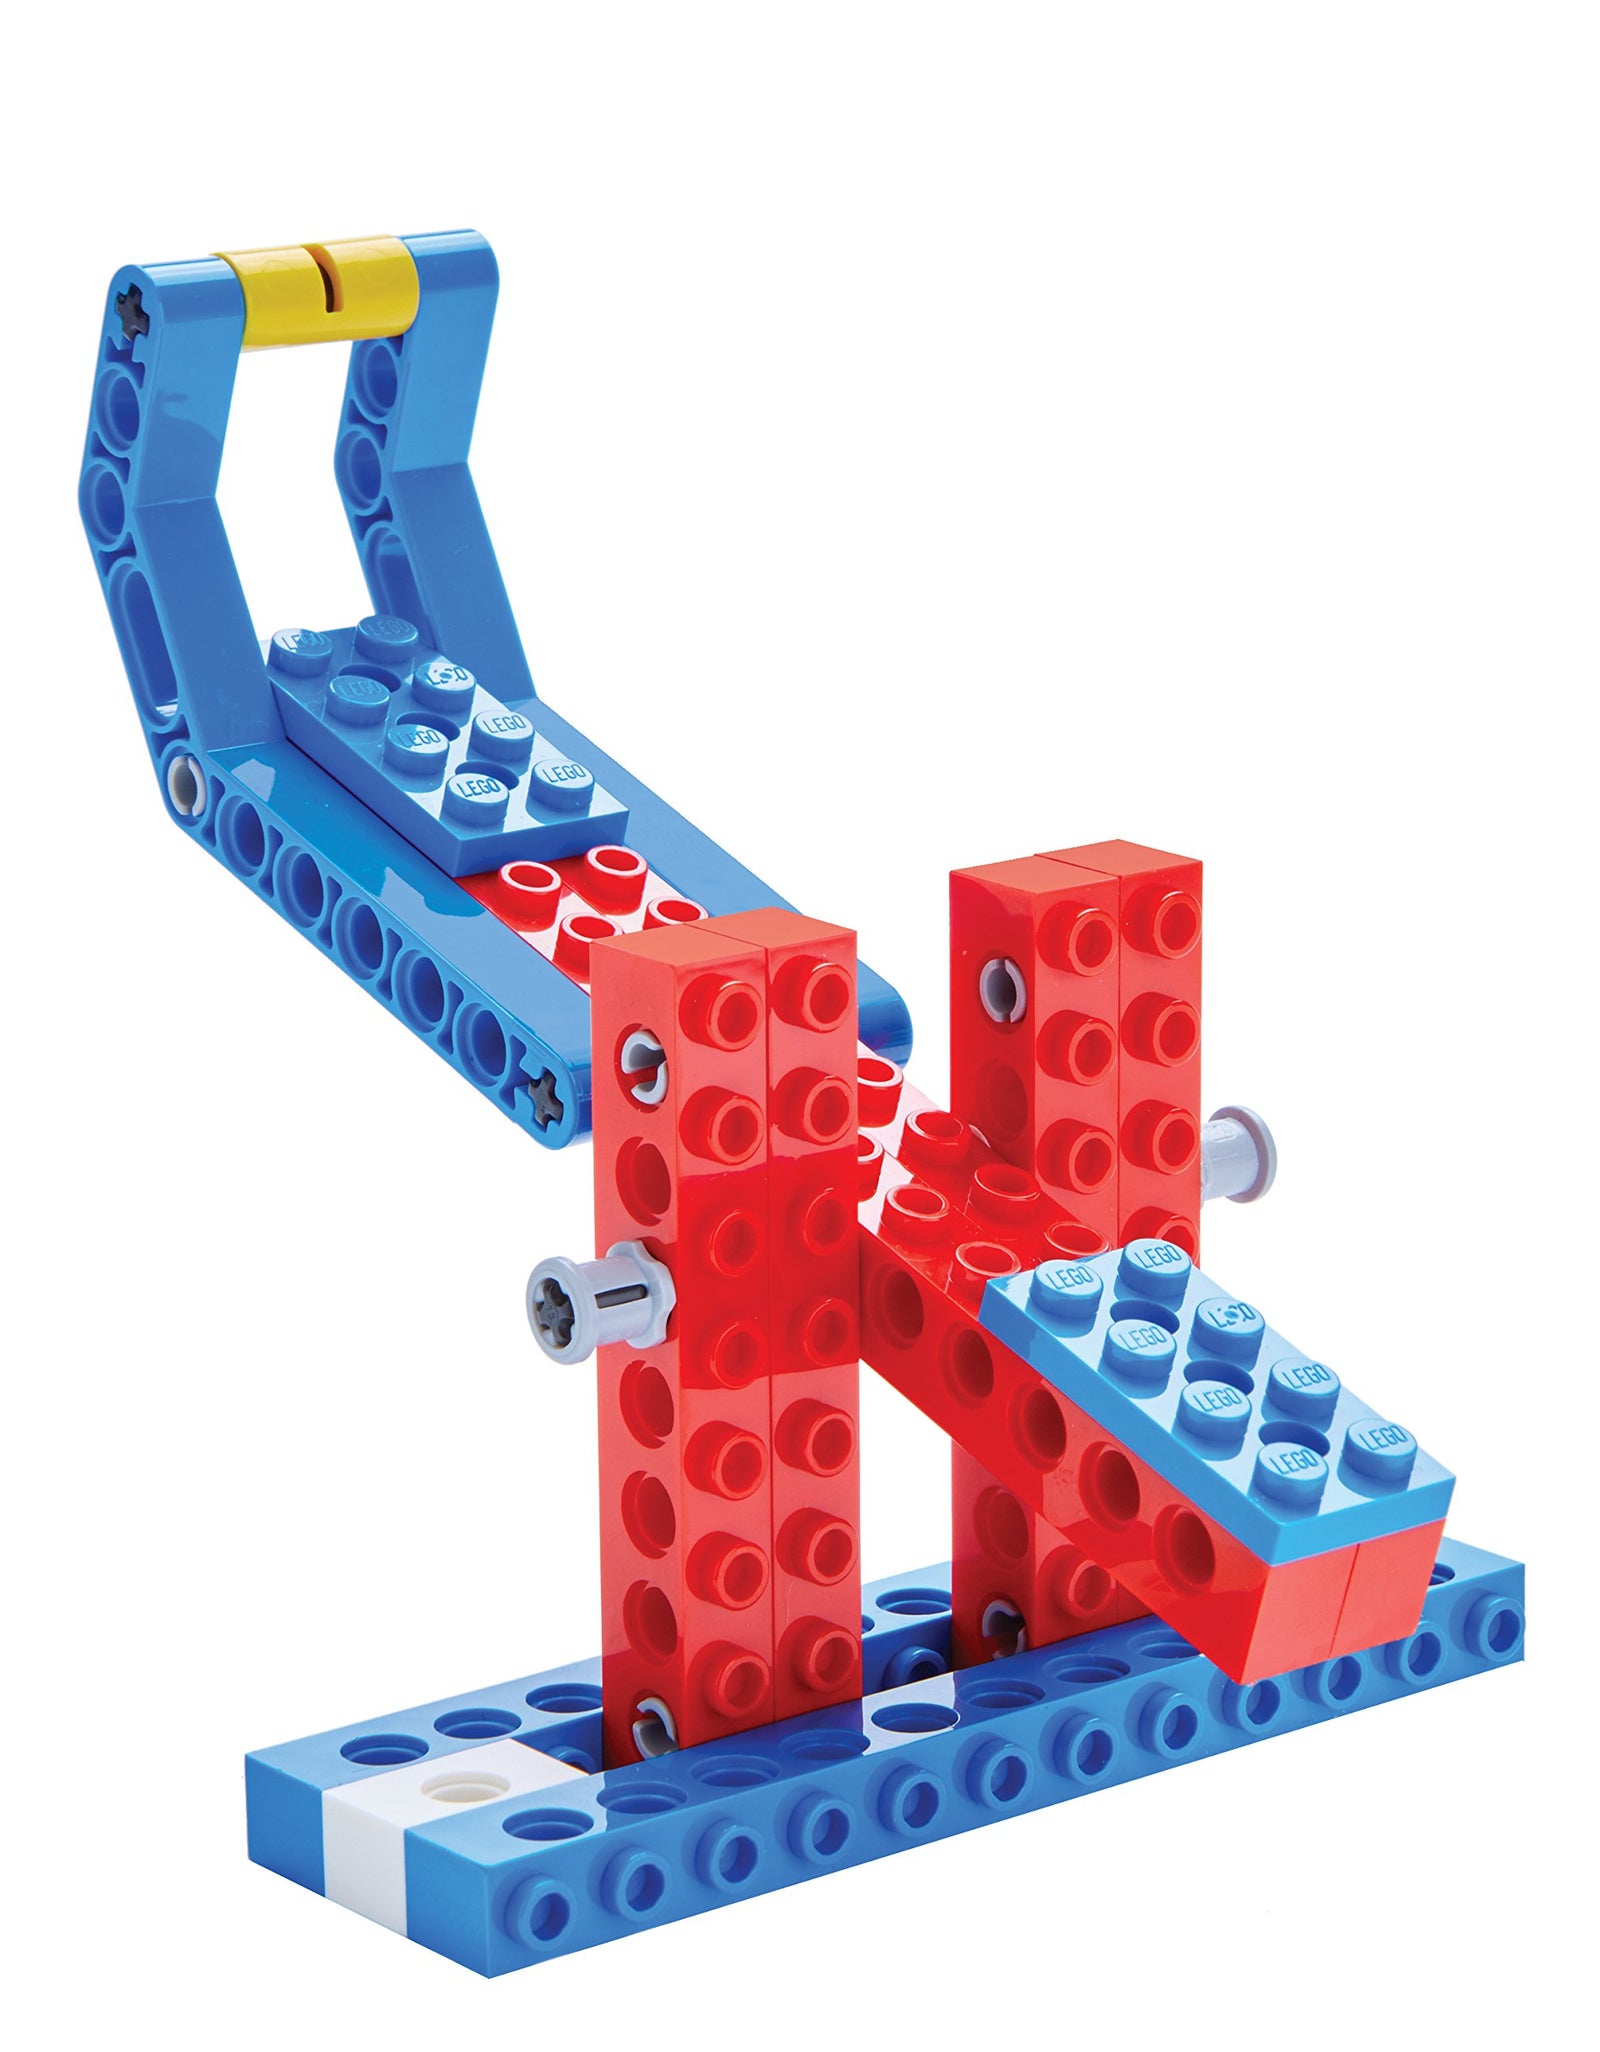 LEGO Gadgets (Klutz Science/STEM Activity Kit) 10.25" Length x 0.75" Width x 10" Height